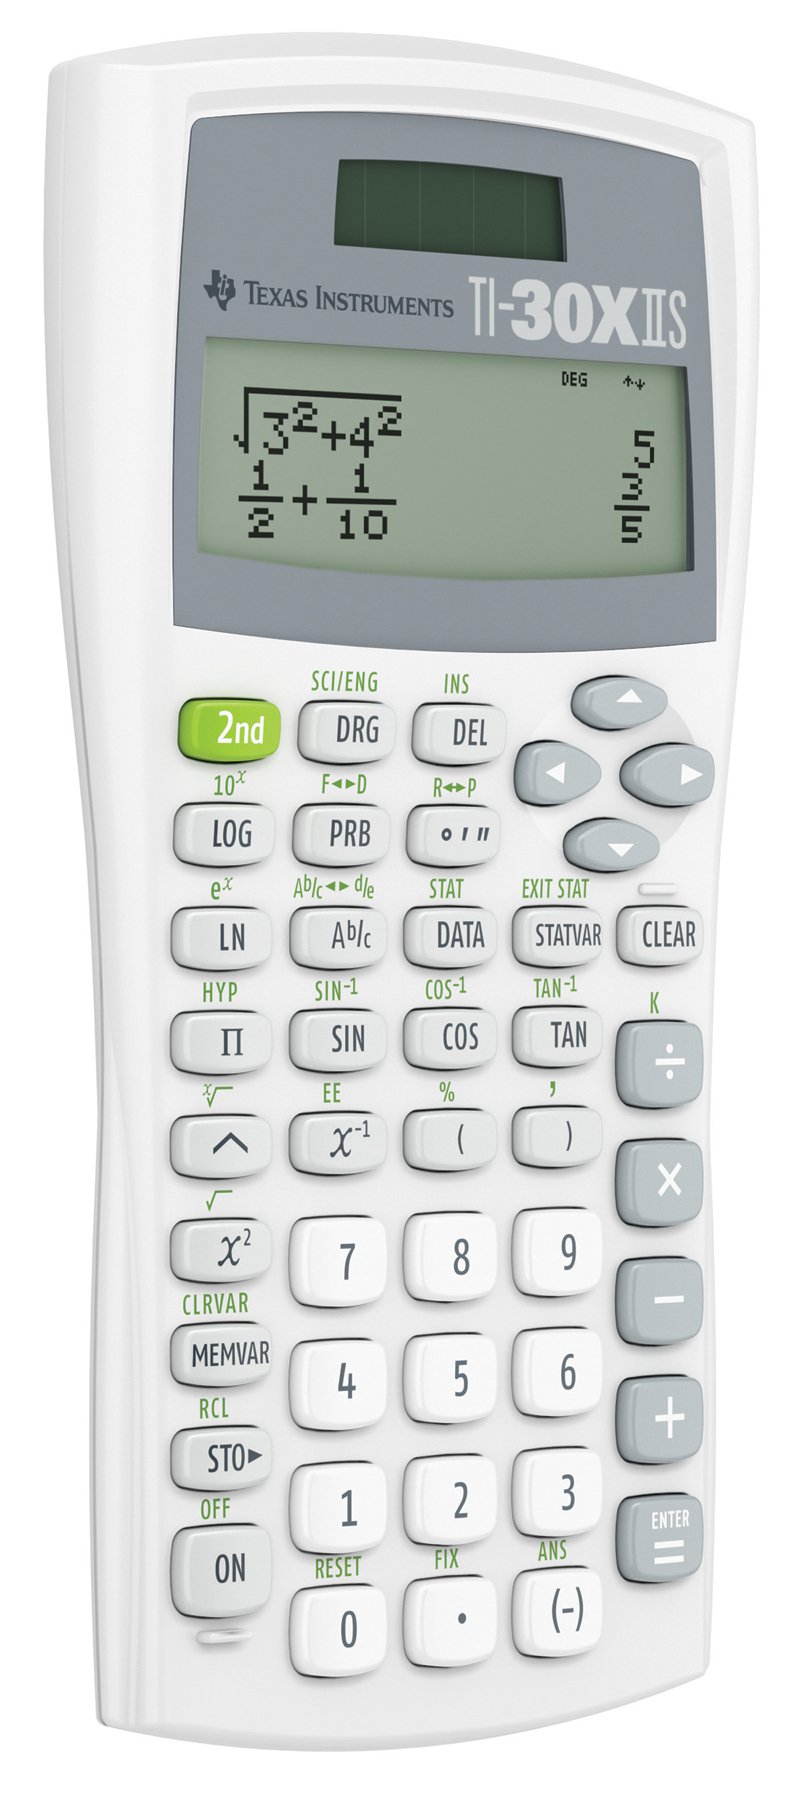 Texas Instruments TI-30XIIS Scientific Calculator, White